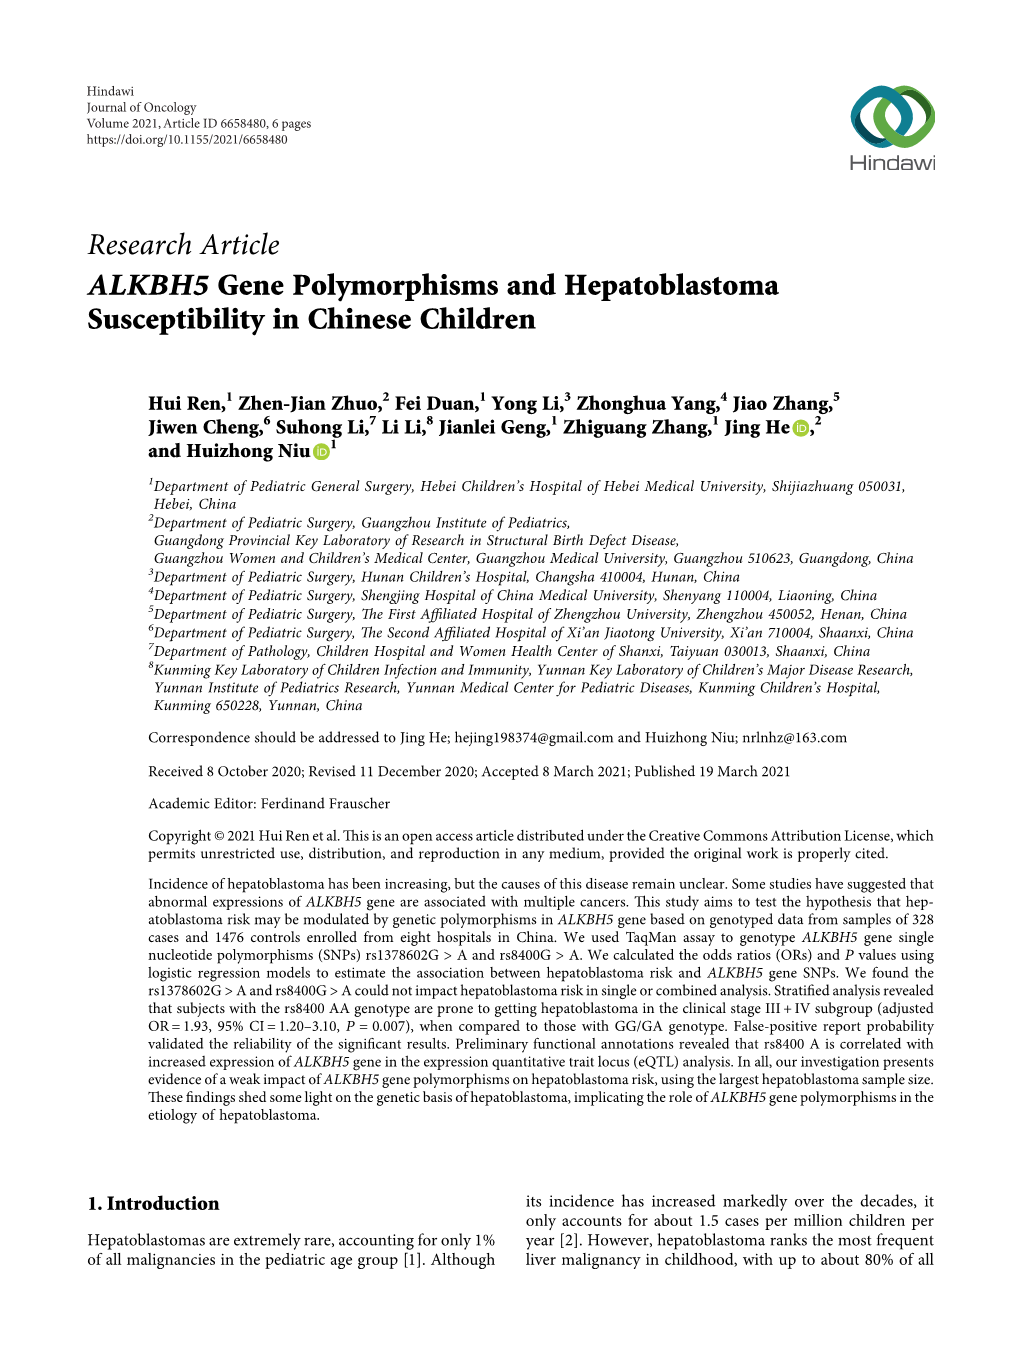 ALKBH5 Gene Polymorphisms and Hepatoblastoma Susceptibility in Chinese Children